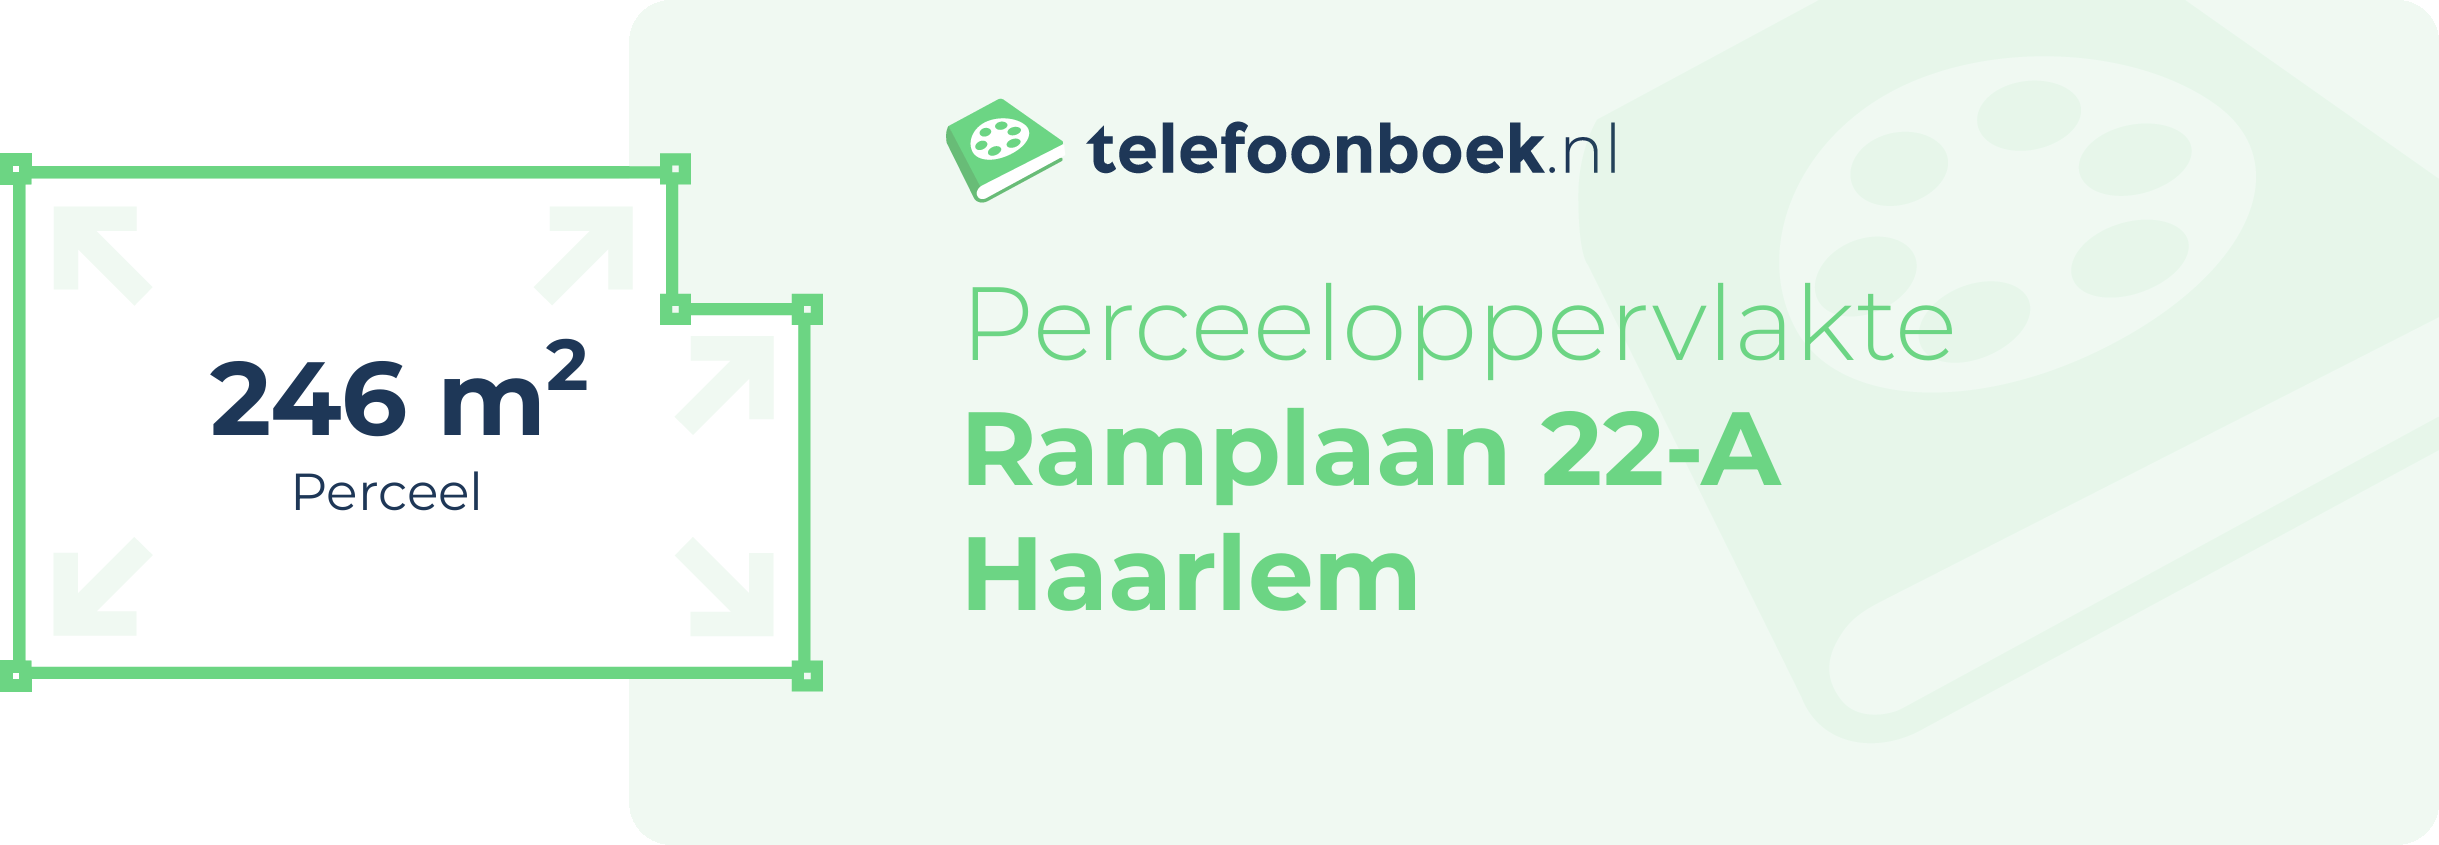 Perceeloppervlakte Ramplaan 22-A Haarlem